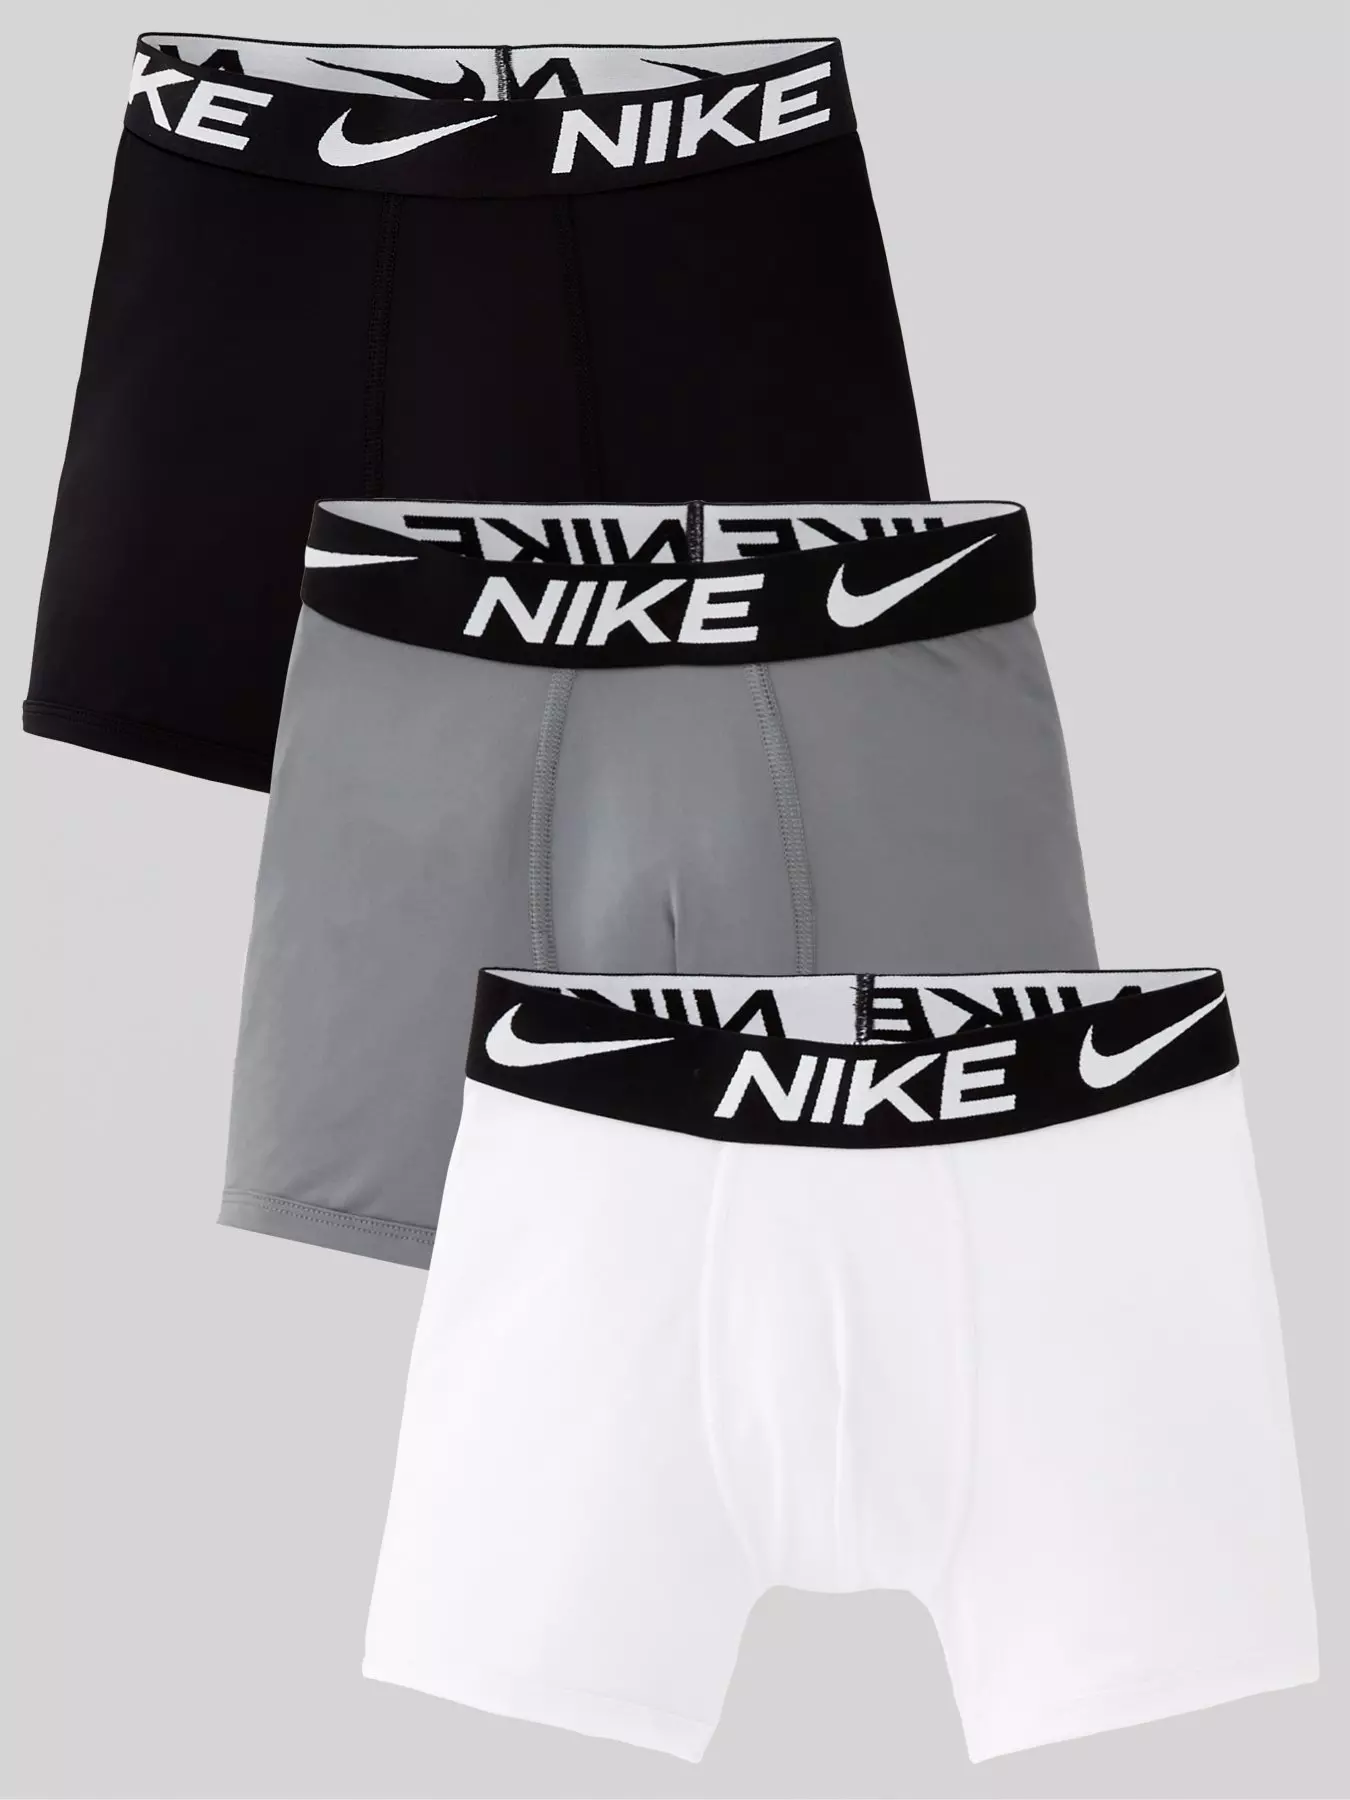 Nike Underwear Mens Boxer Brief 3pk - Multi